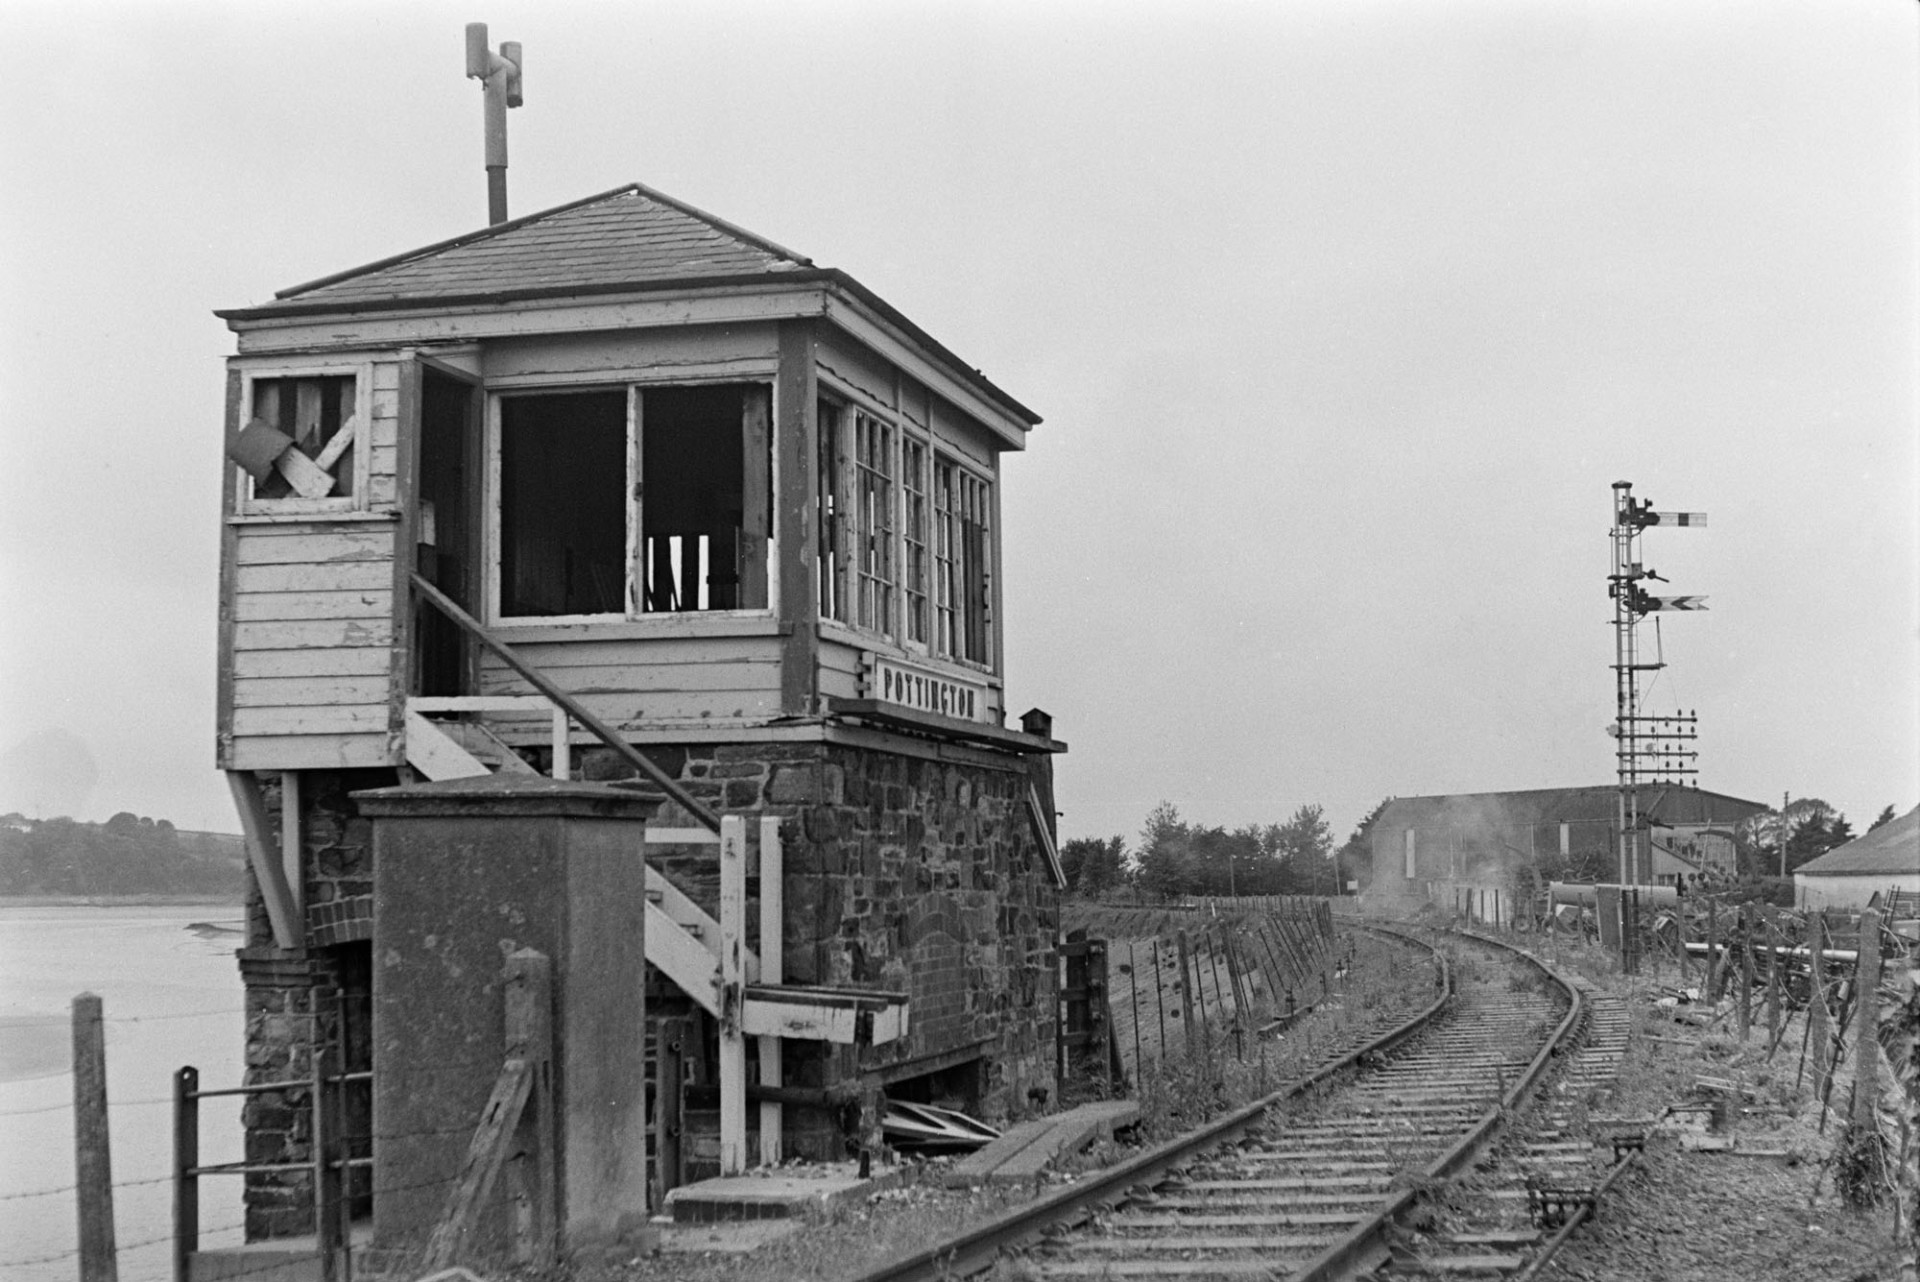 Pottington signal box on the Barnstaple railway track by the River Taw.